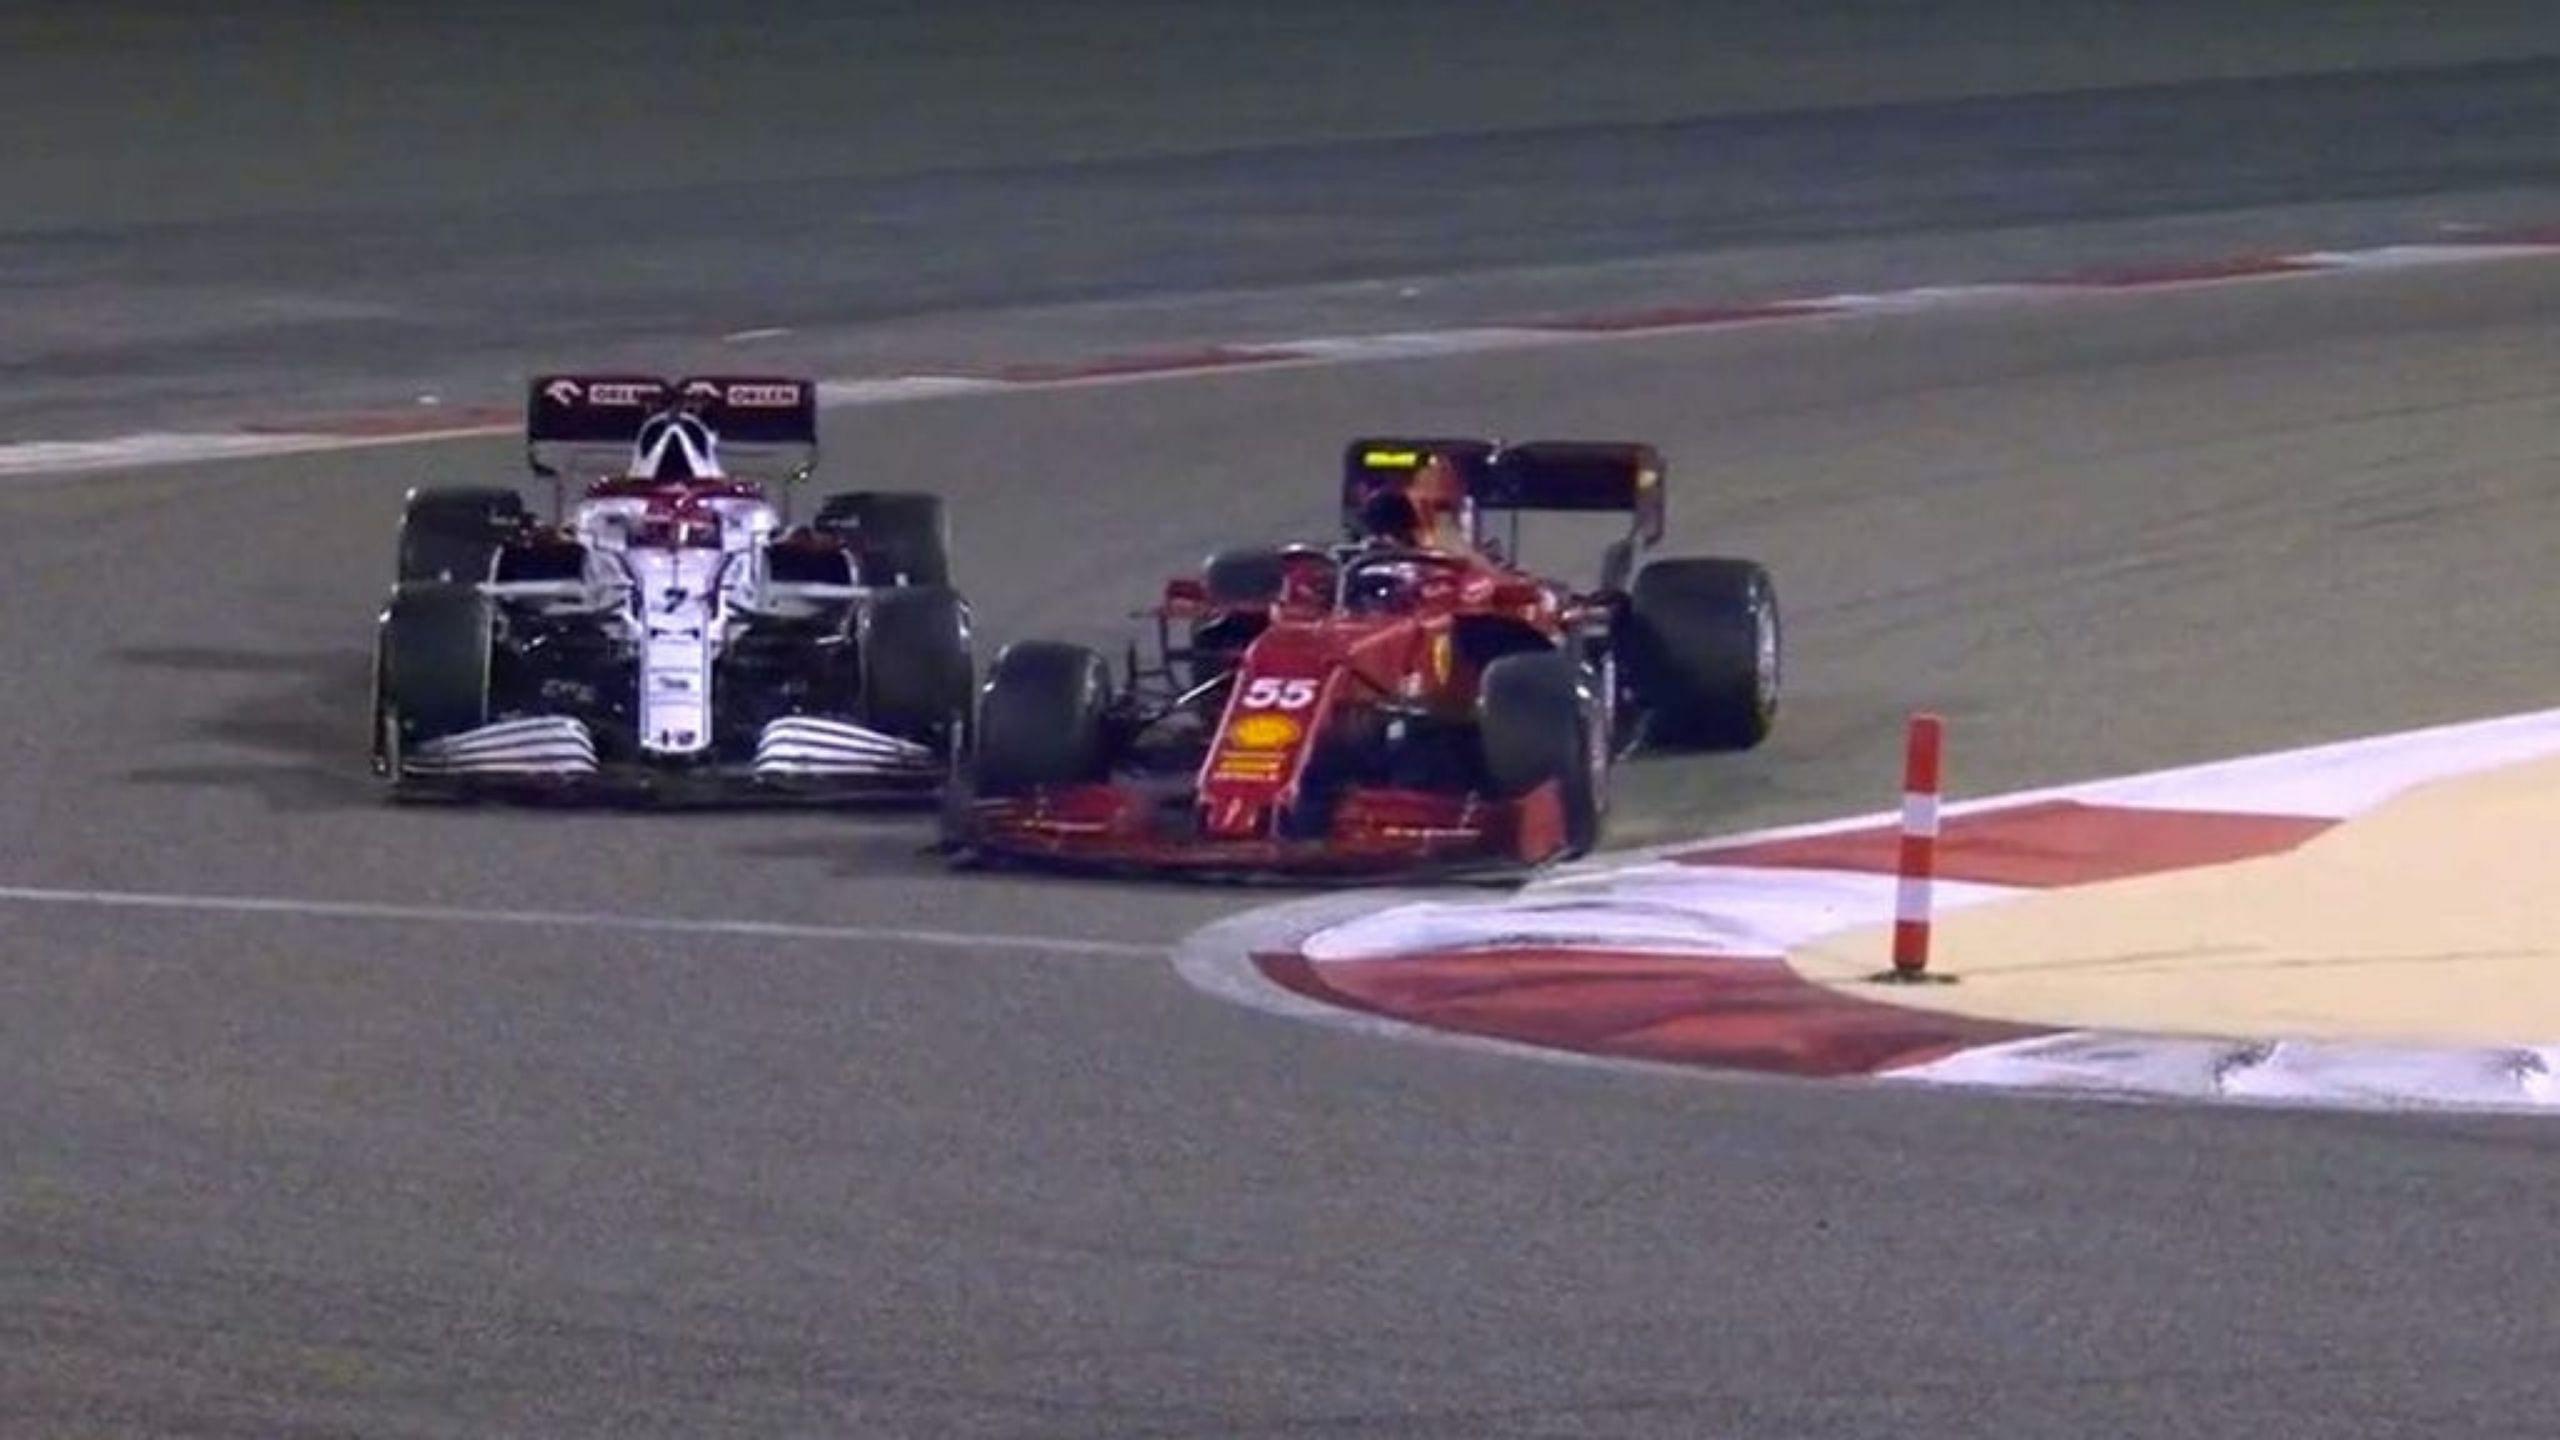 WATCH: Carlos Sainz collides into Kimi Raikkonen during Day 3 of pre-season testing in Bahrain